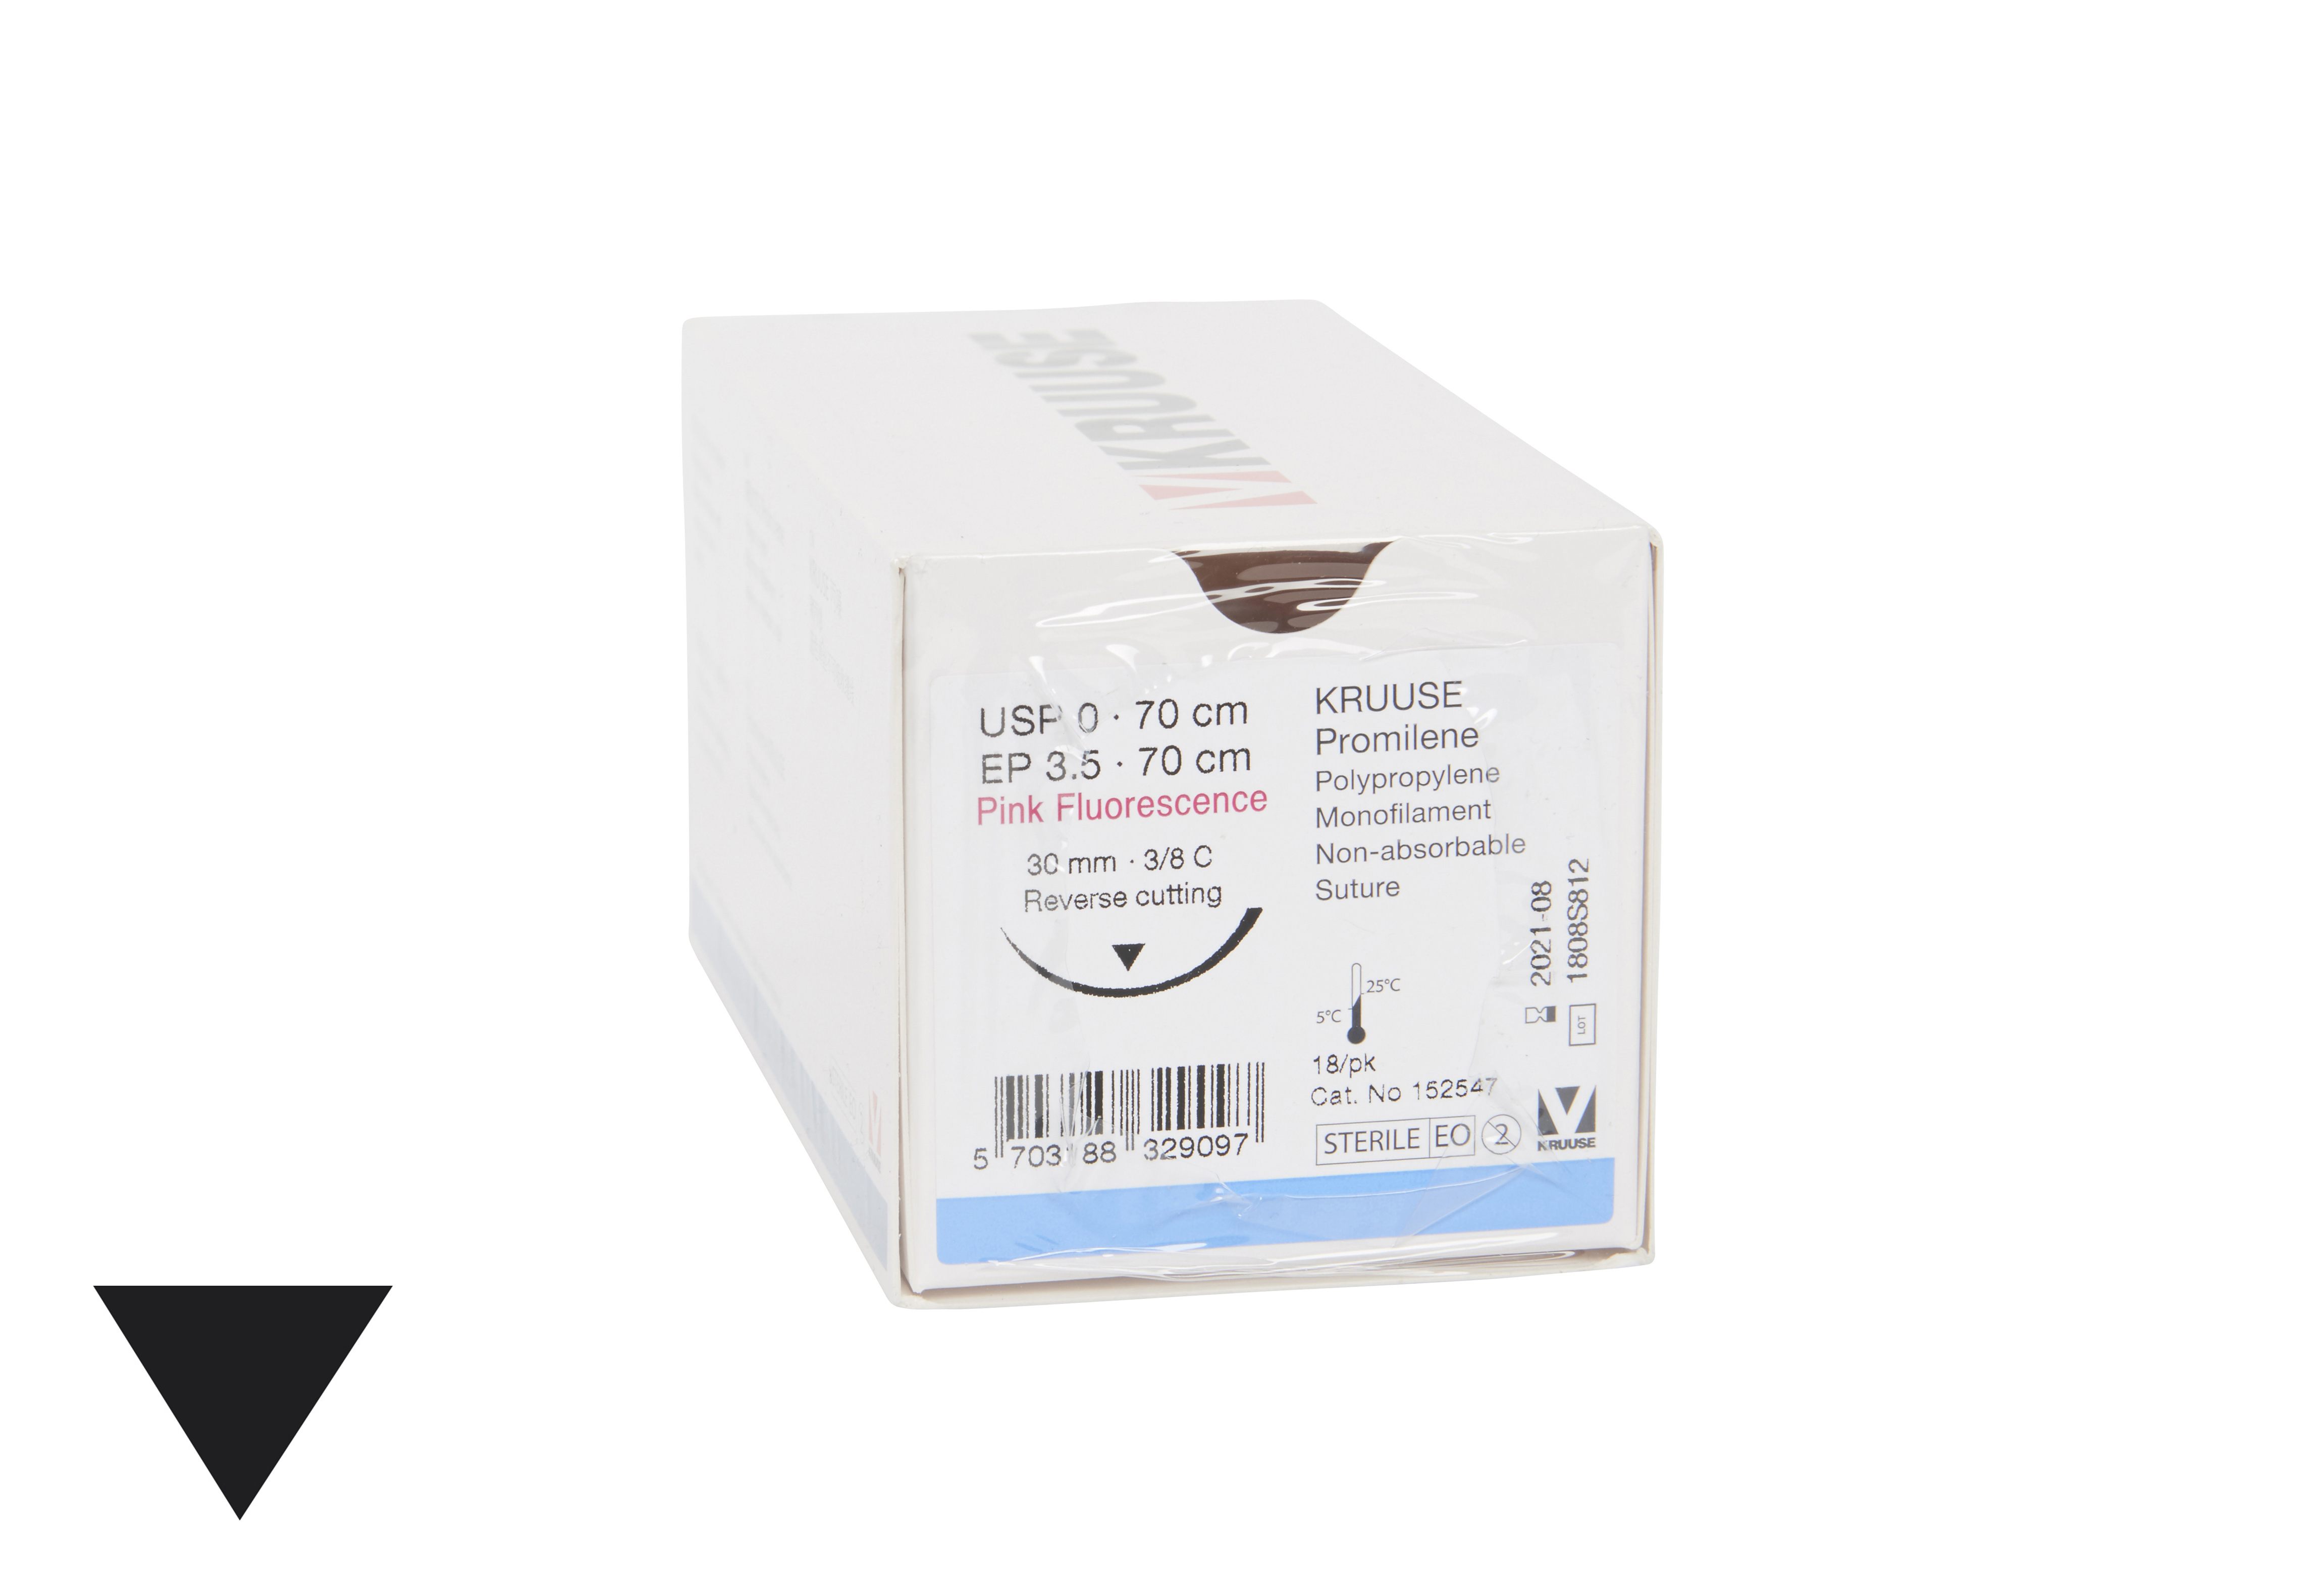 KRUUSE Promilene Suture USP 0/EP 3.5, 70 cm, pink (fluorescence). Needle:  30 mm, 3/8C, RC, 18/pk